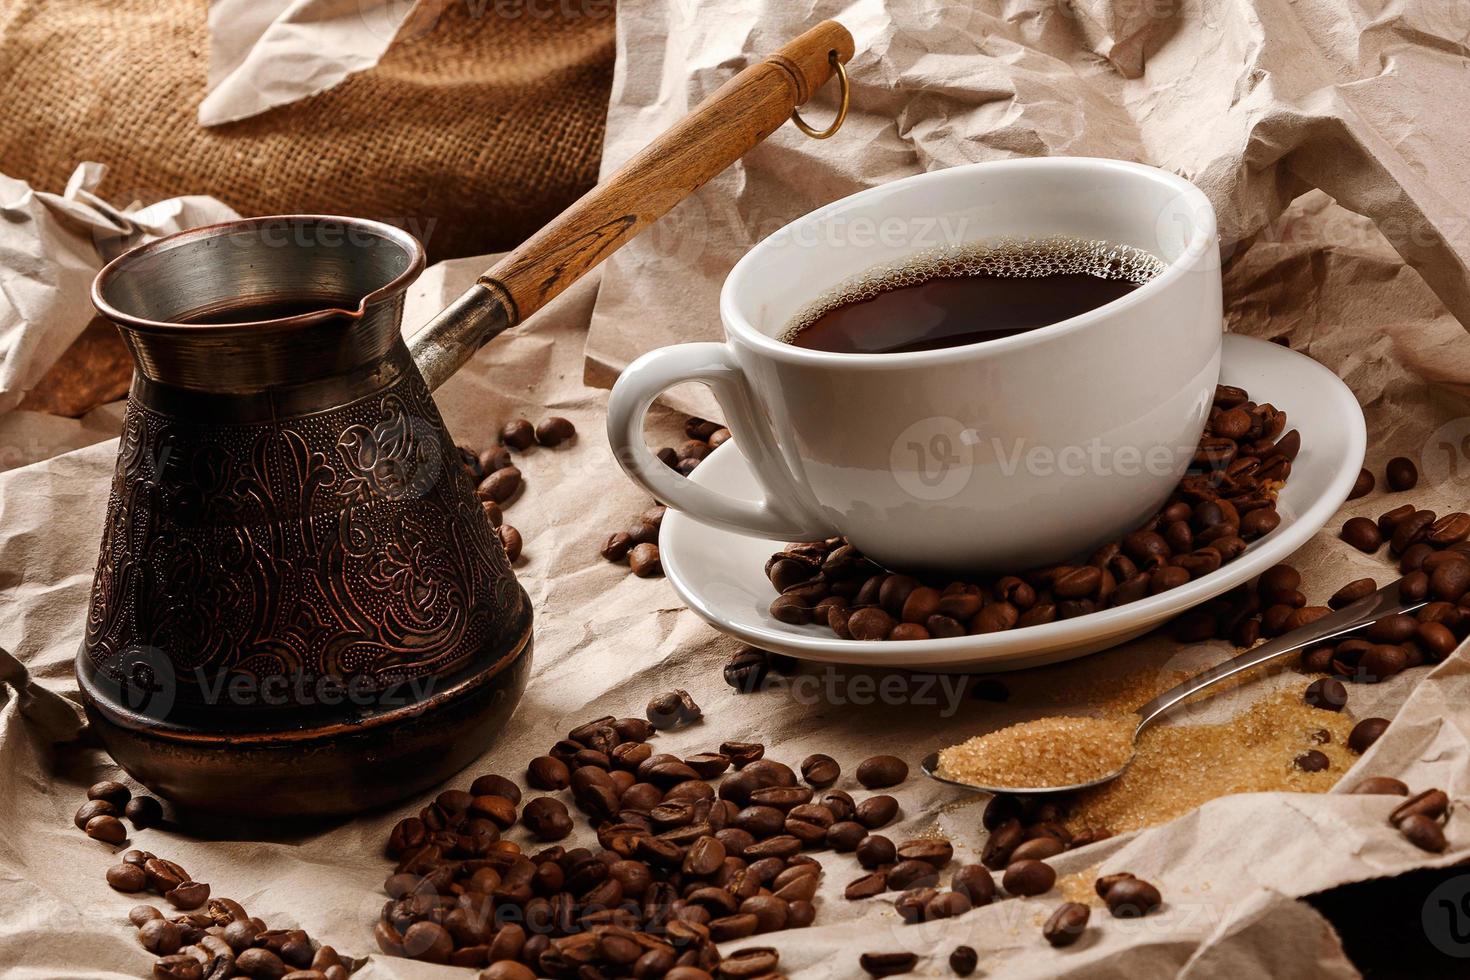 taza de café y cezve para café turco foto